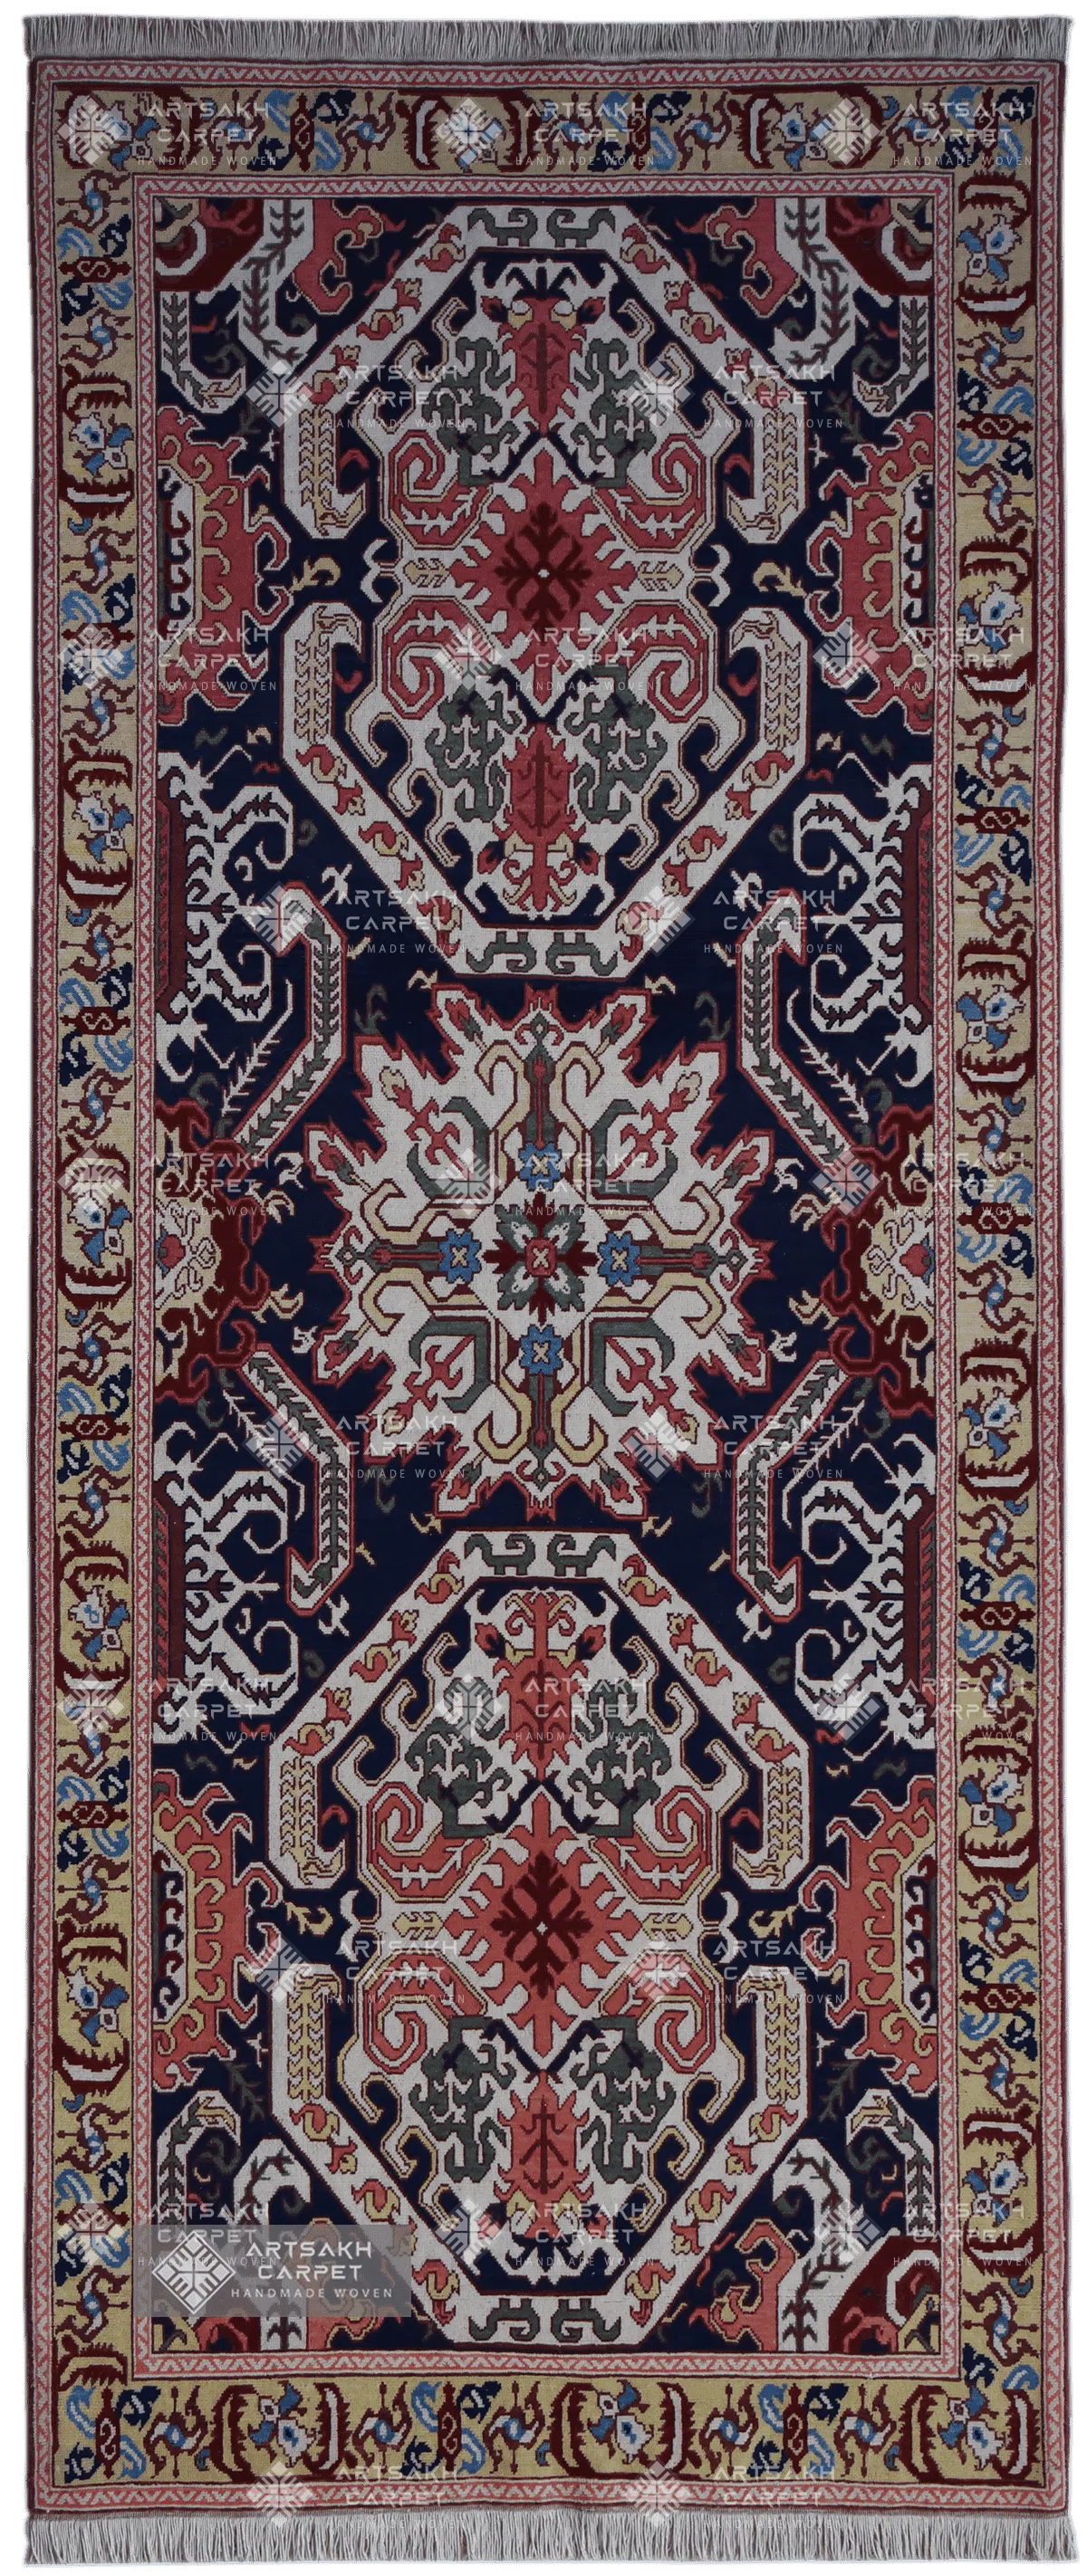 Armenian traditional carpet Jraberd Artsvagorg